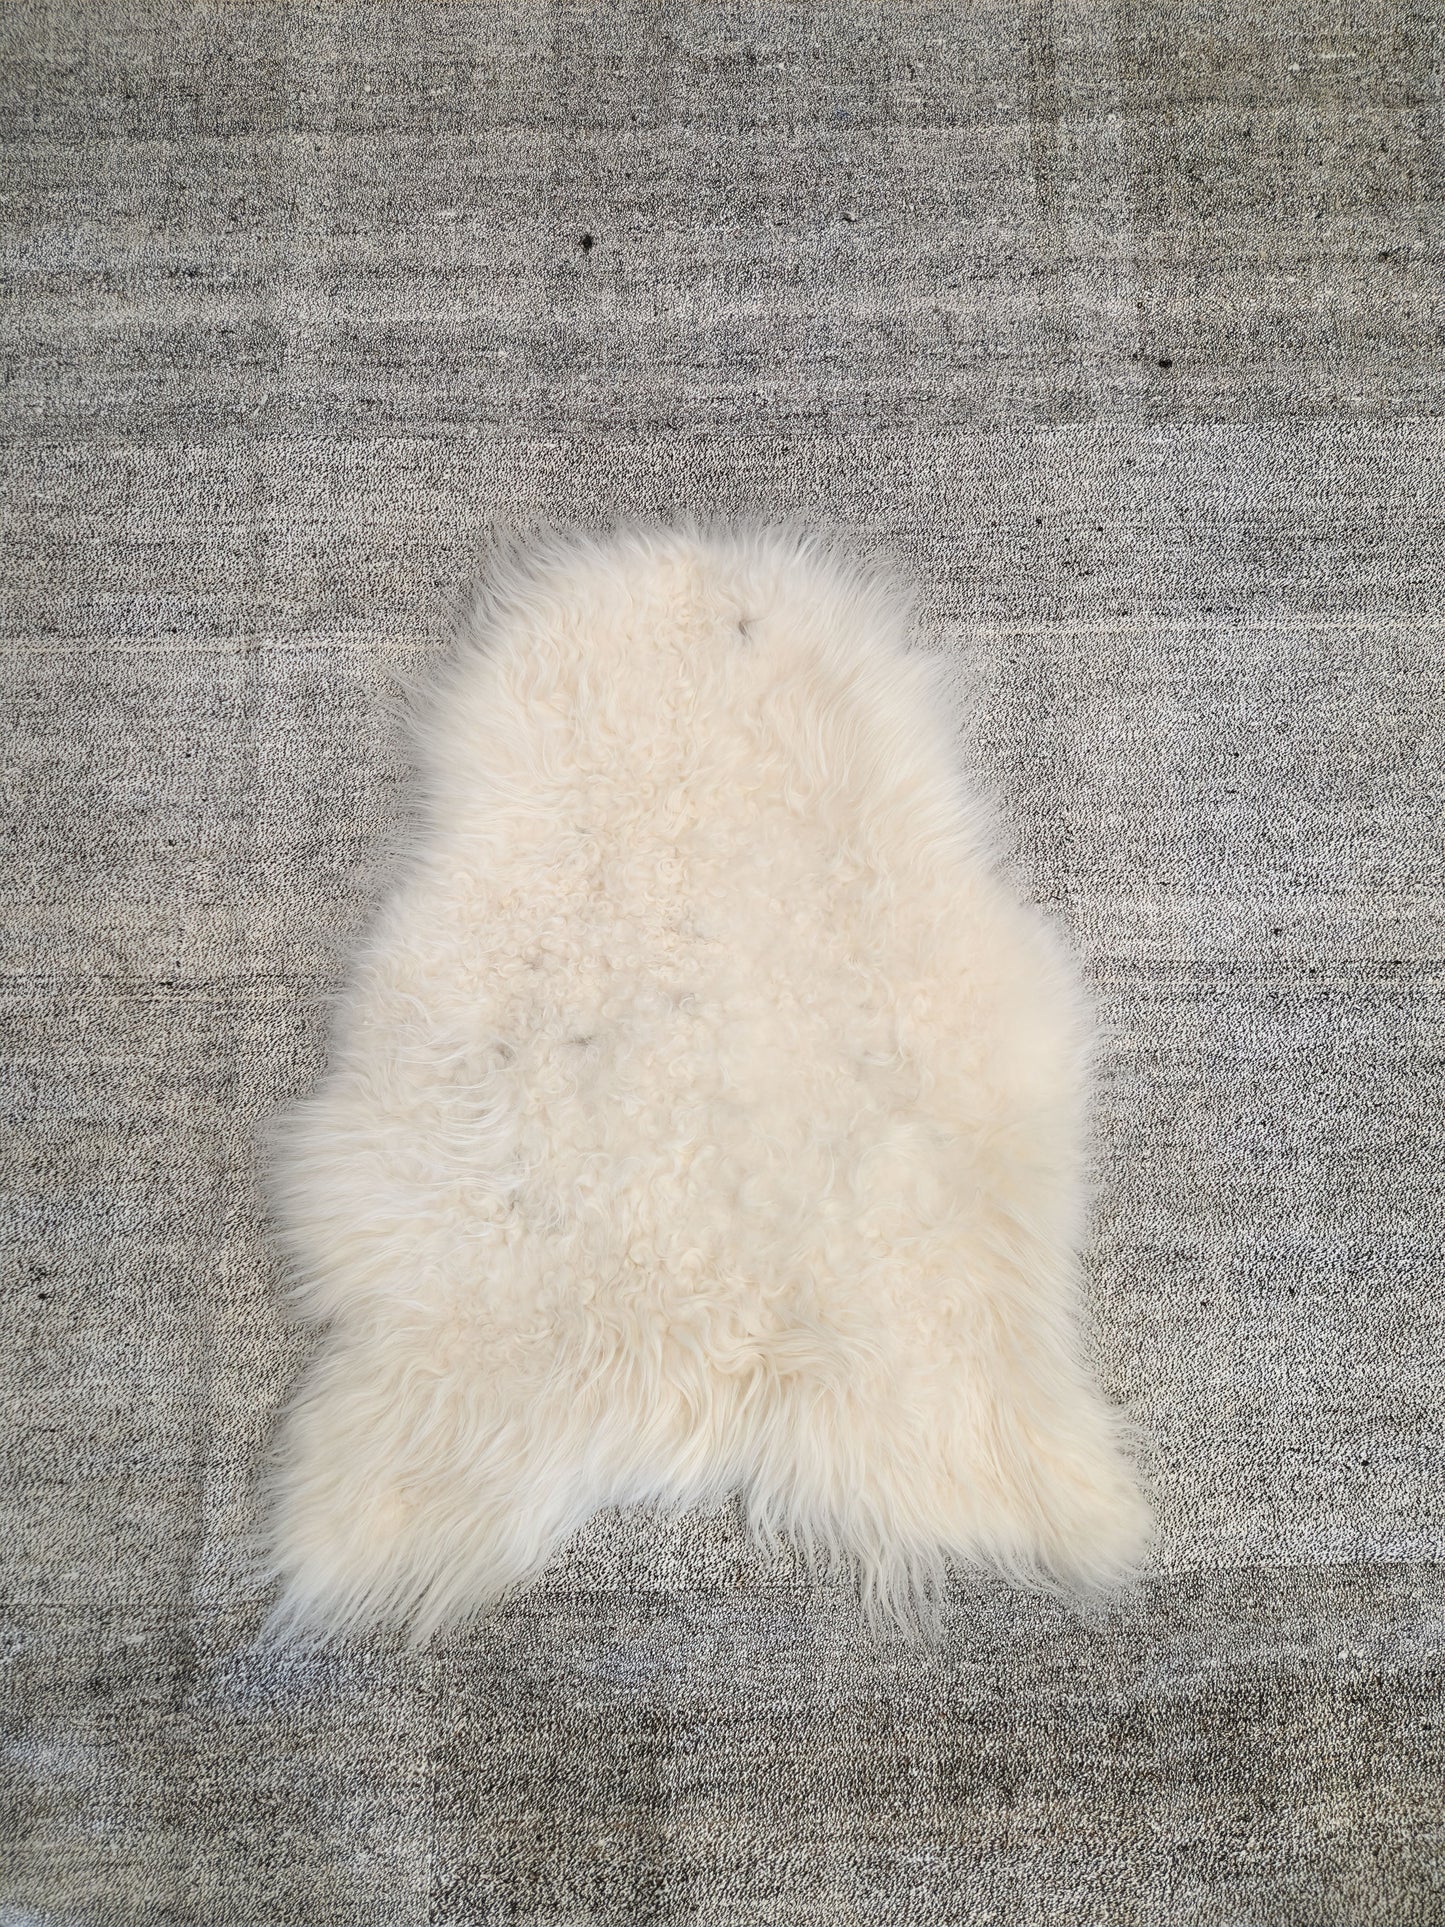 ONE OF THE KIND Icelandic White Sheepskin